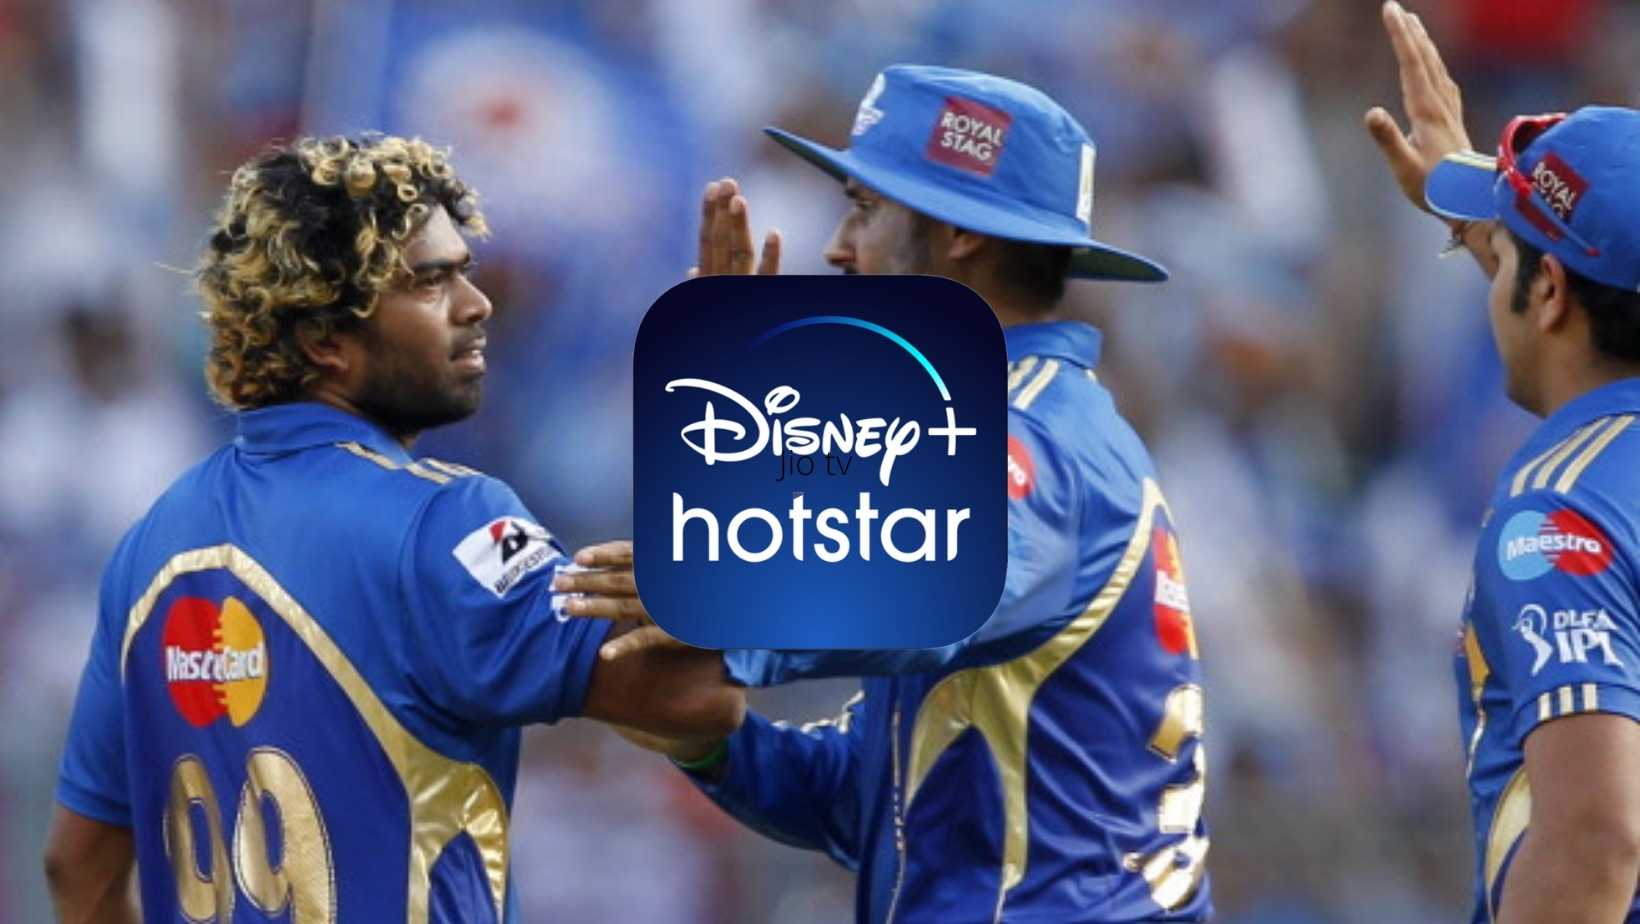 Disney+Hotstar IPL matches online telecasts 